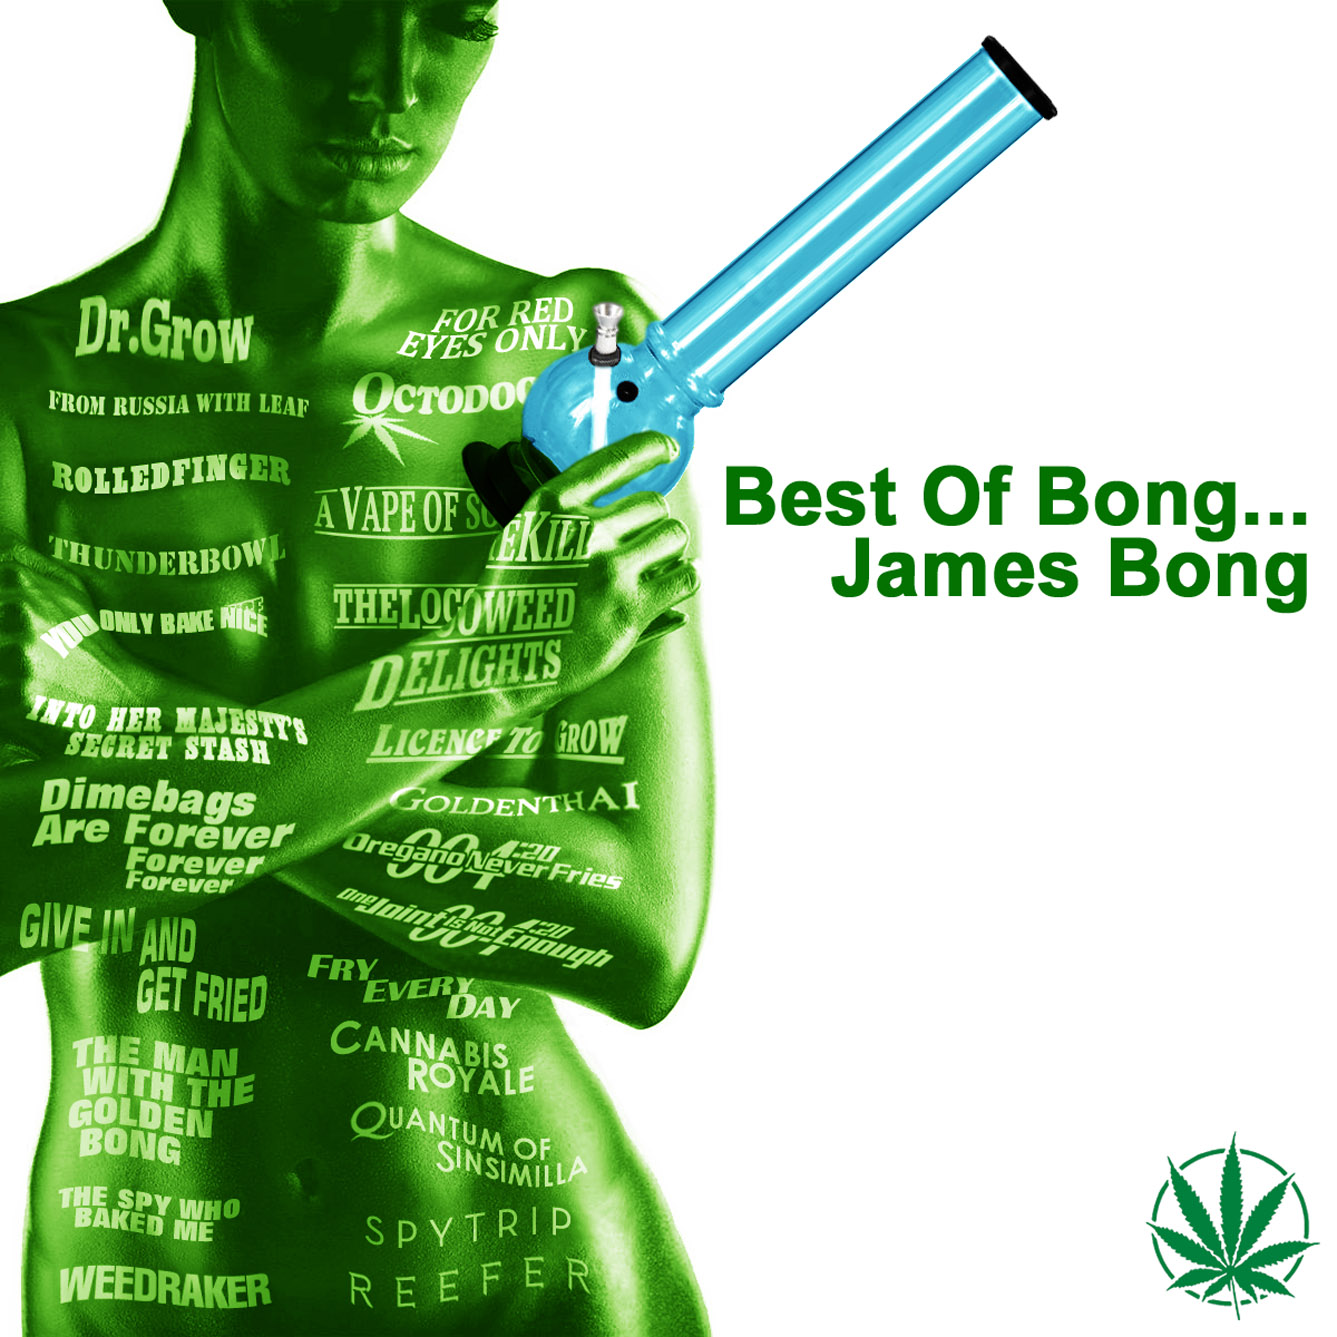 Album cover parody of Best of Bond...James Bond 50th Anniversary by james bond themes